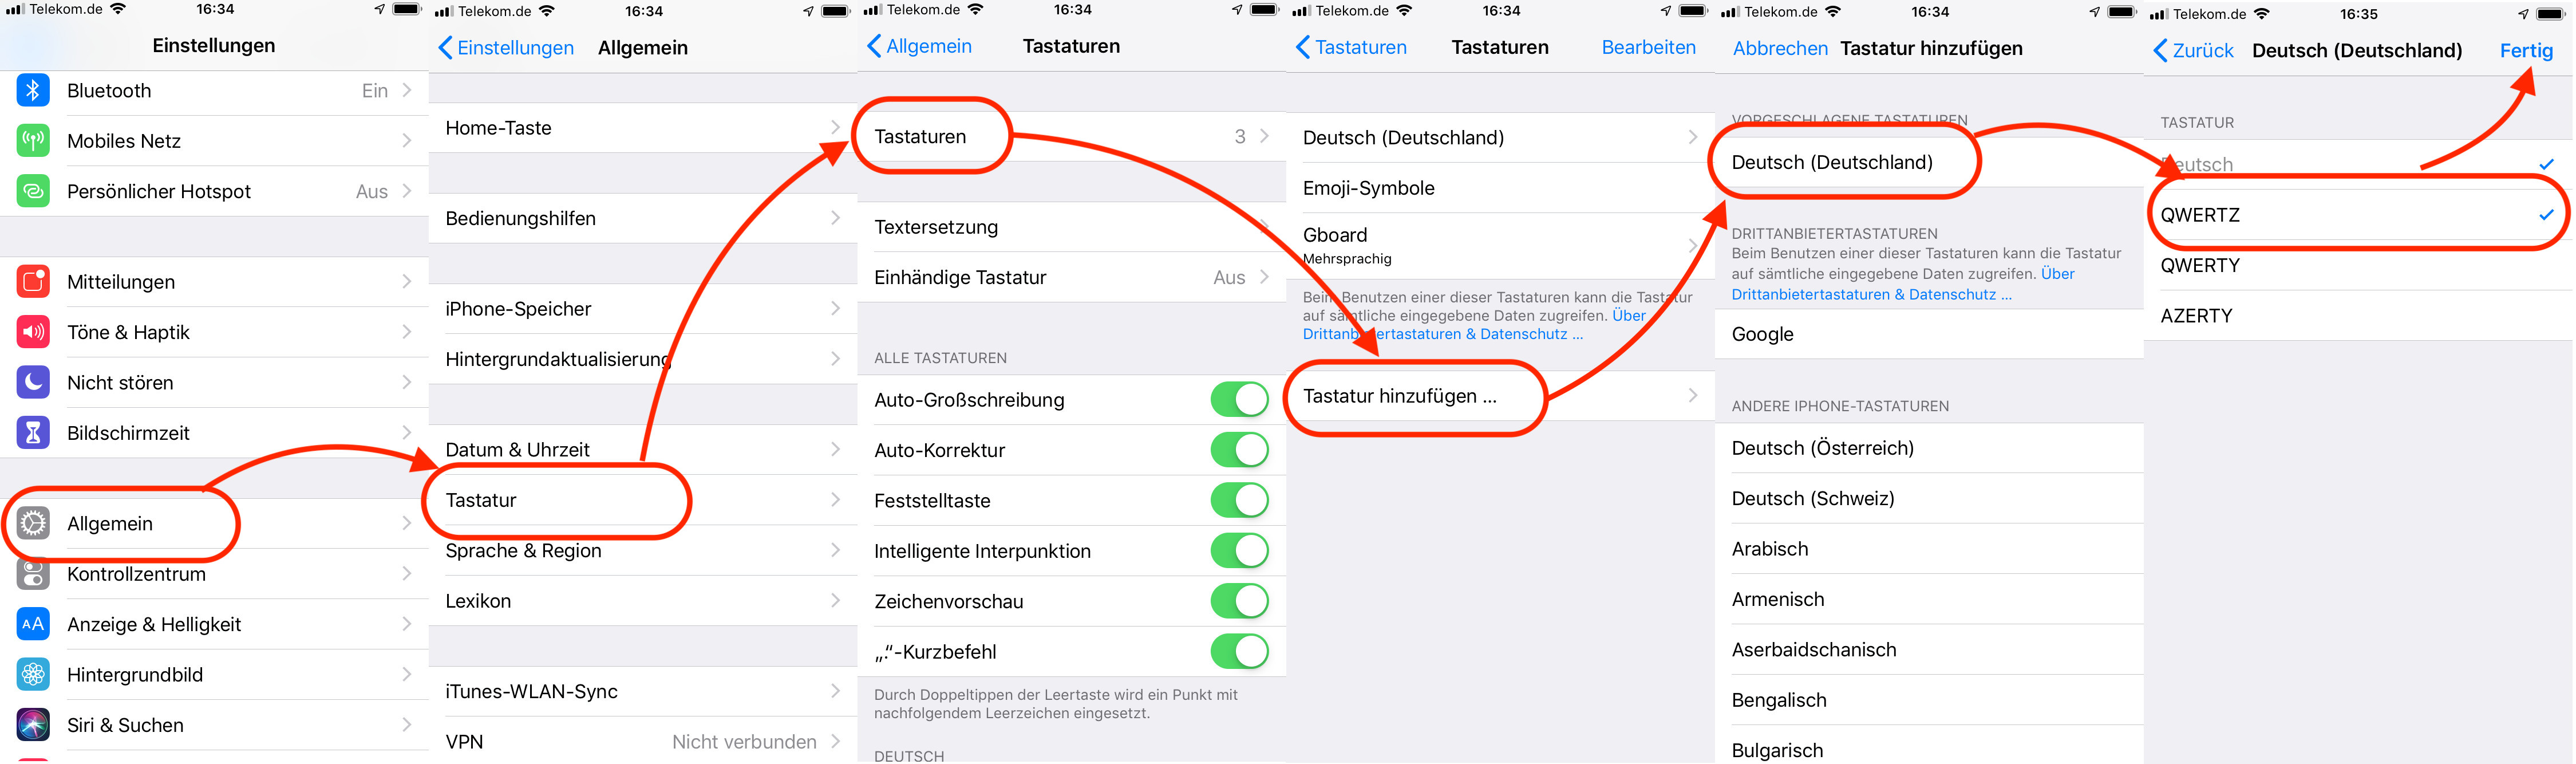 Kalksten renovere At adskille iPhone: Tastatur vergrößern vermeidet Tippfehler - RandomBrick.de